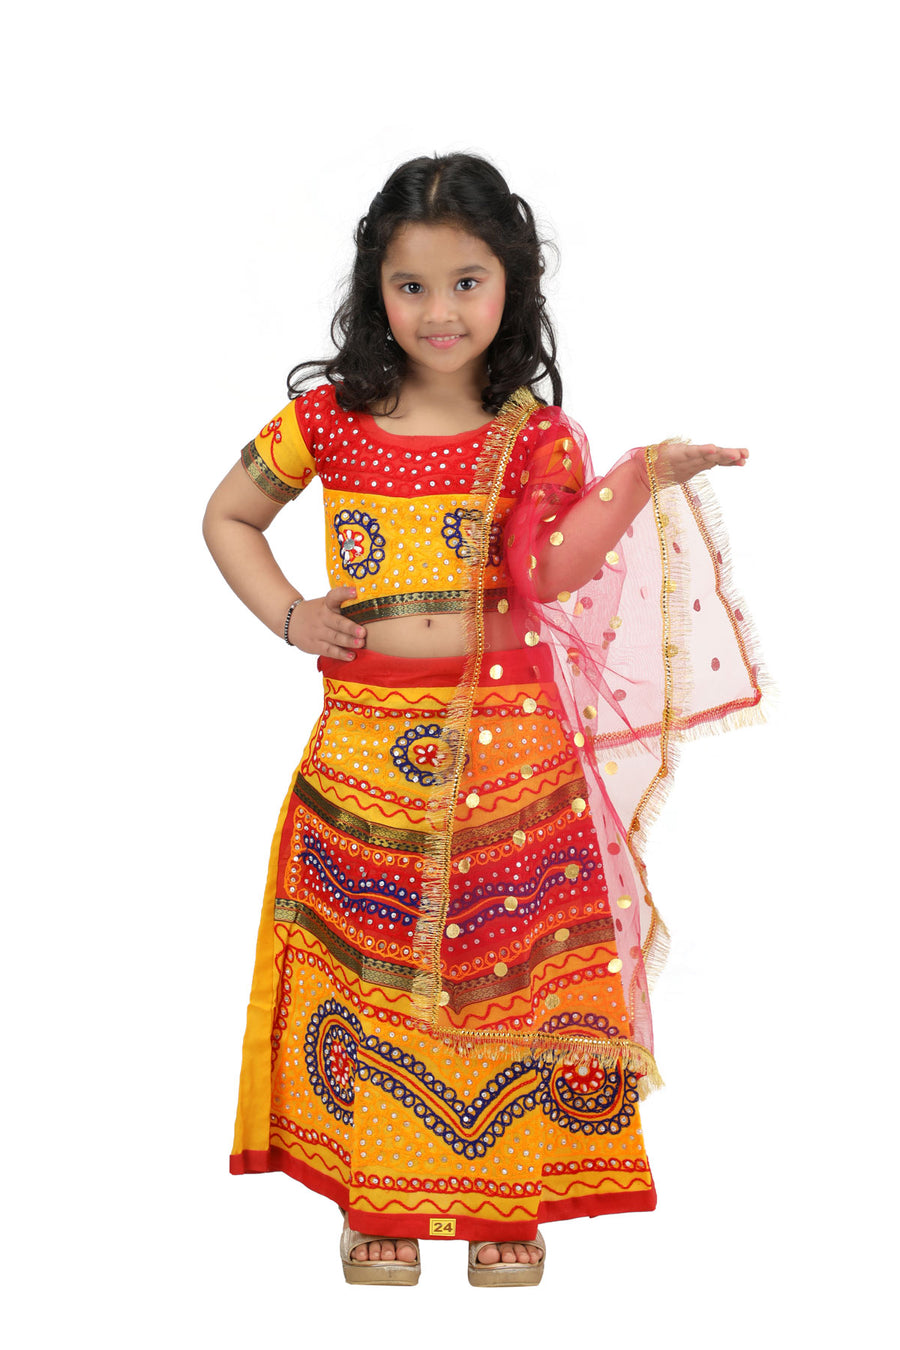 adviicd Radha Dress For Baby Girl Toddler Girls Dress Cotton Linen Ruffle  Backless Sleeveless Kids Casual Party Dresses - Walmart.com